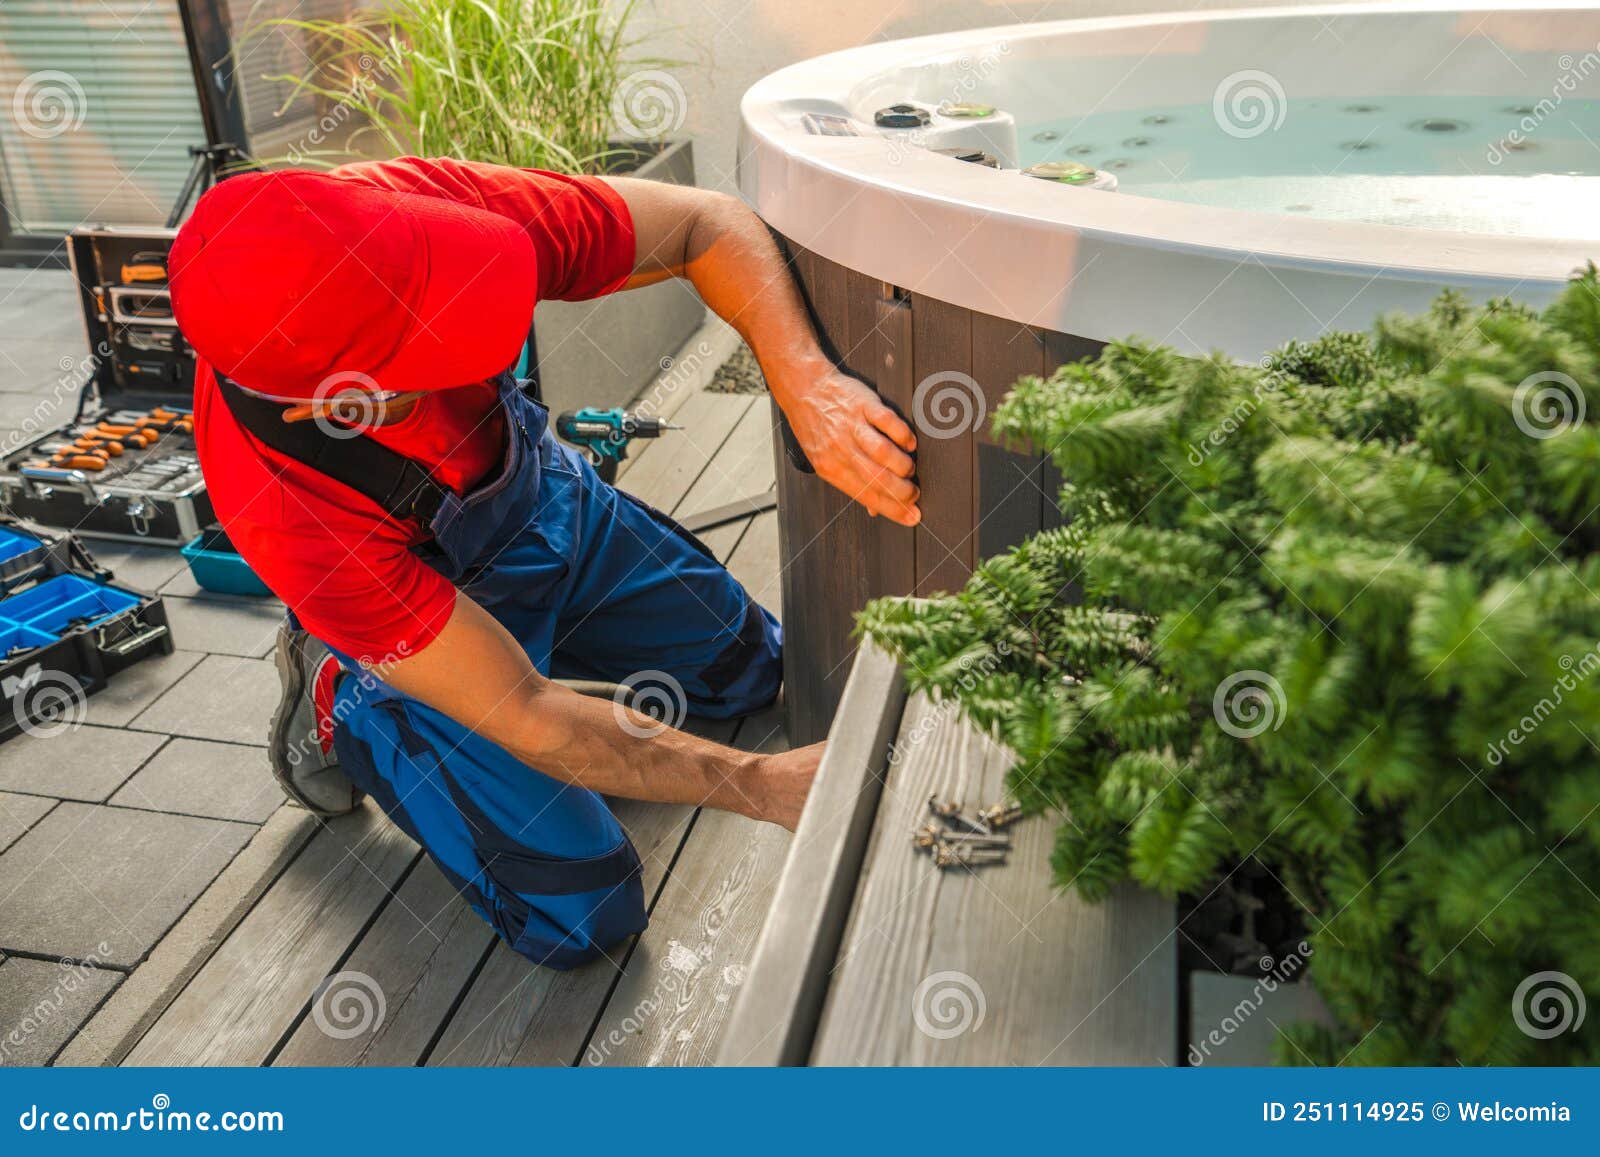 garden outdoor hot tub maintenance